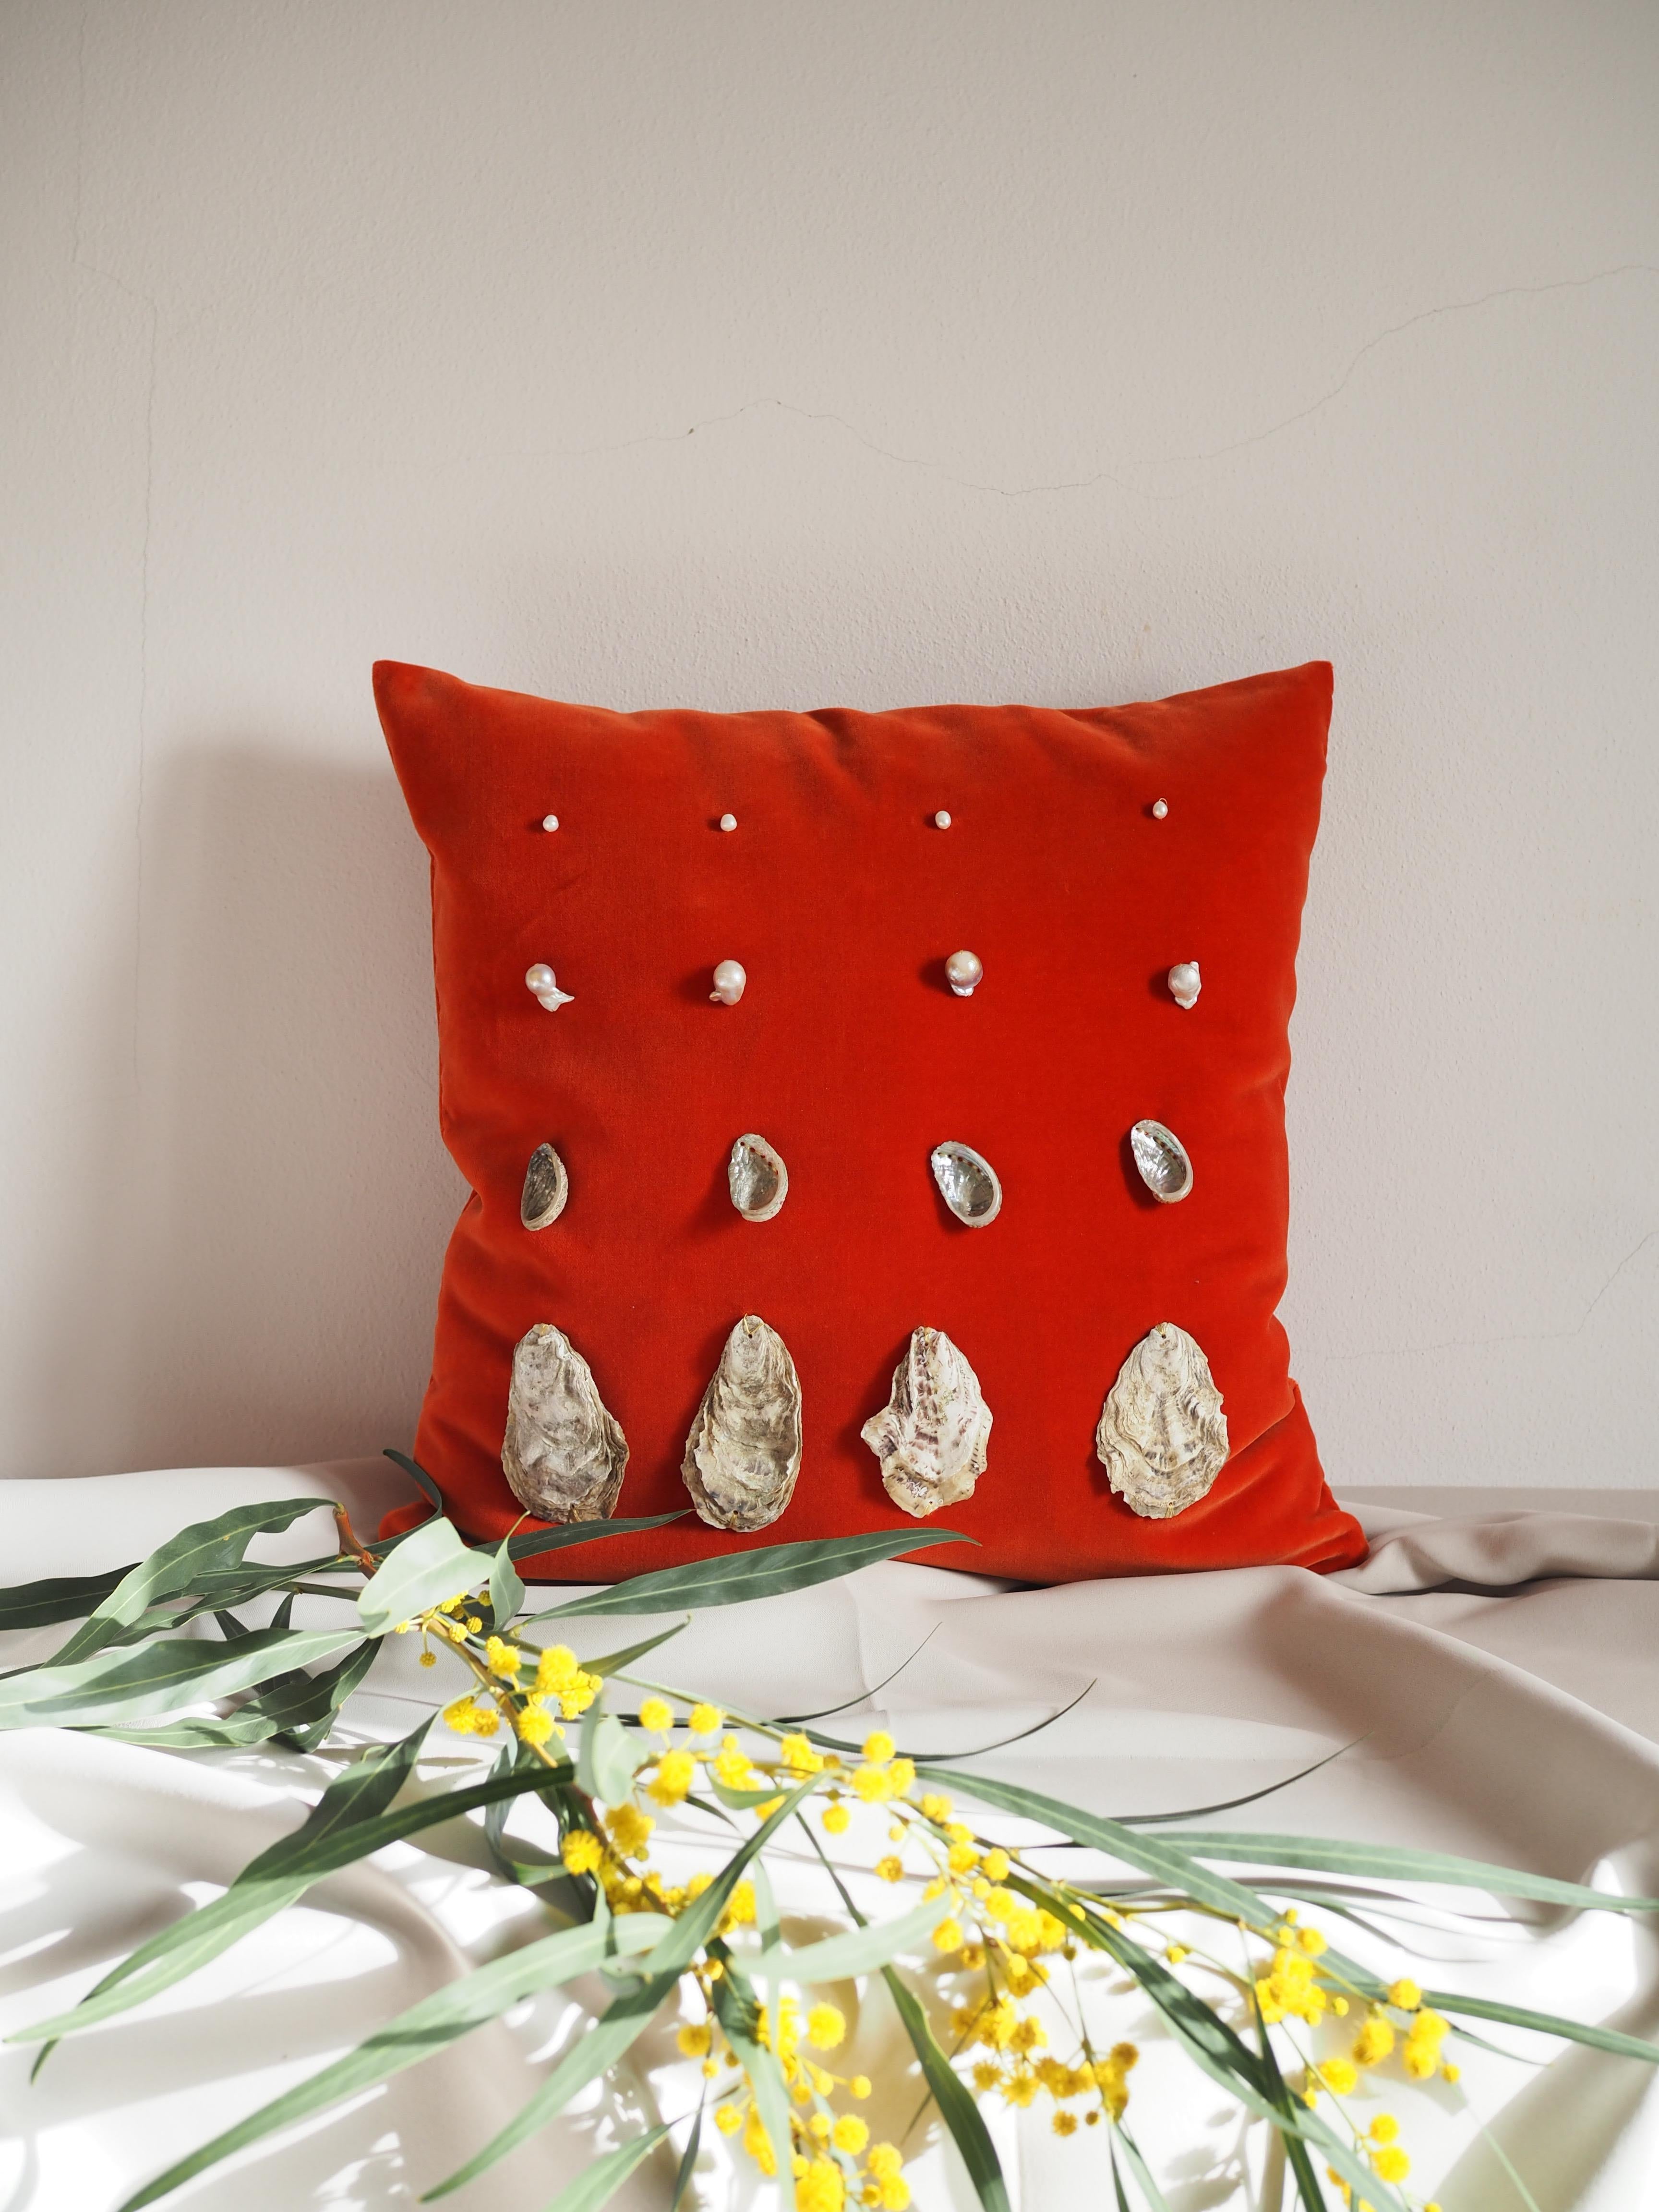 Spanish Bon Appetit 007 Decorative Cushion Culto Ponsoda 21st century desingn For Sale